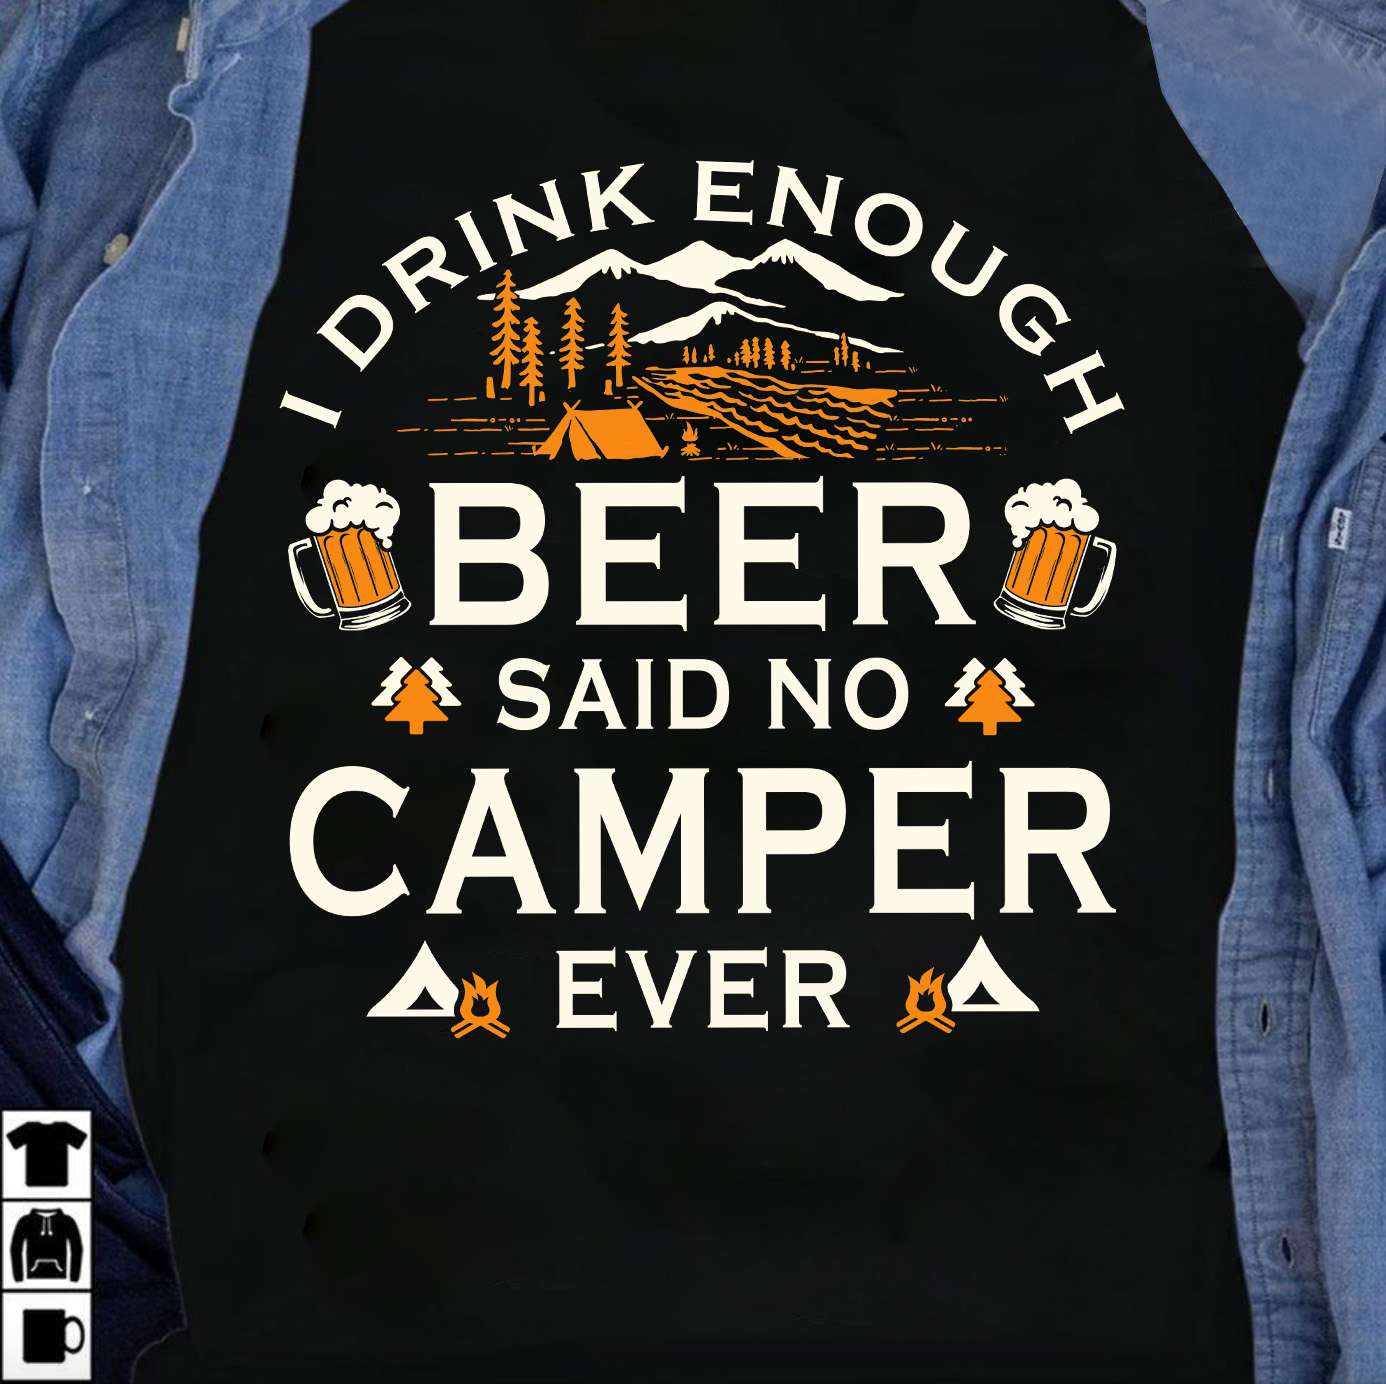 I drink enough beer, said no camper ever - Drink beer while camping, beer lover